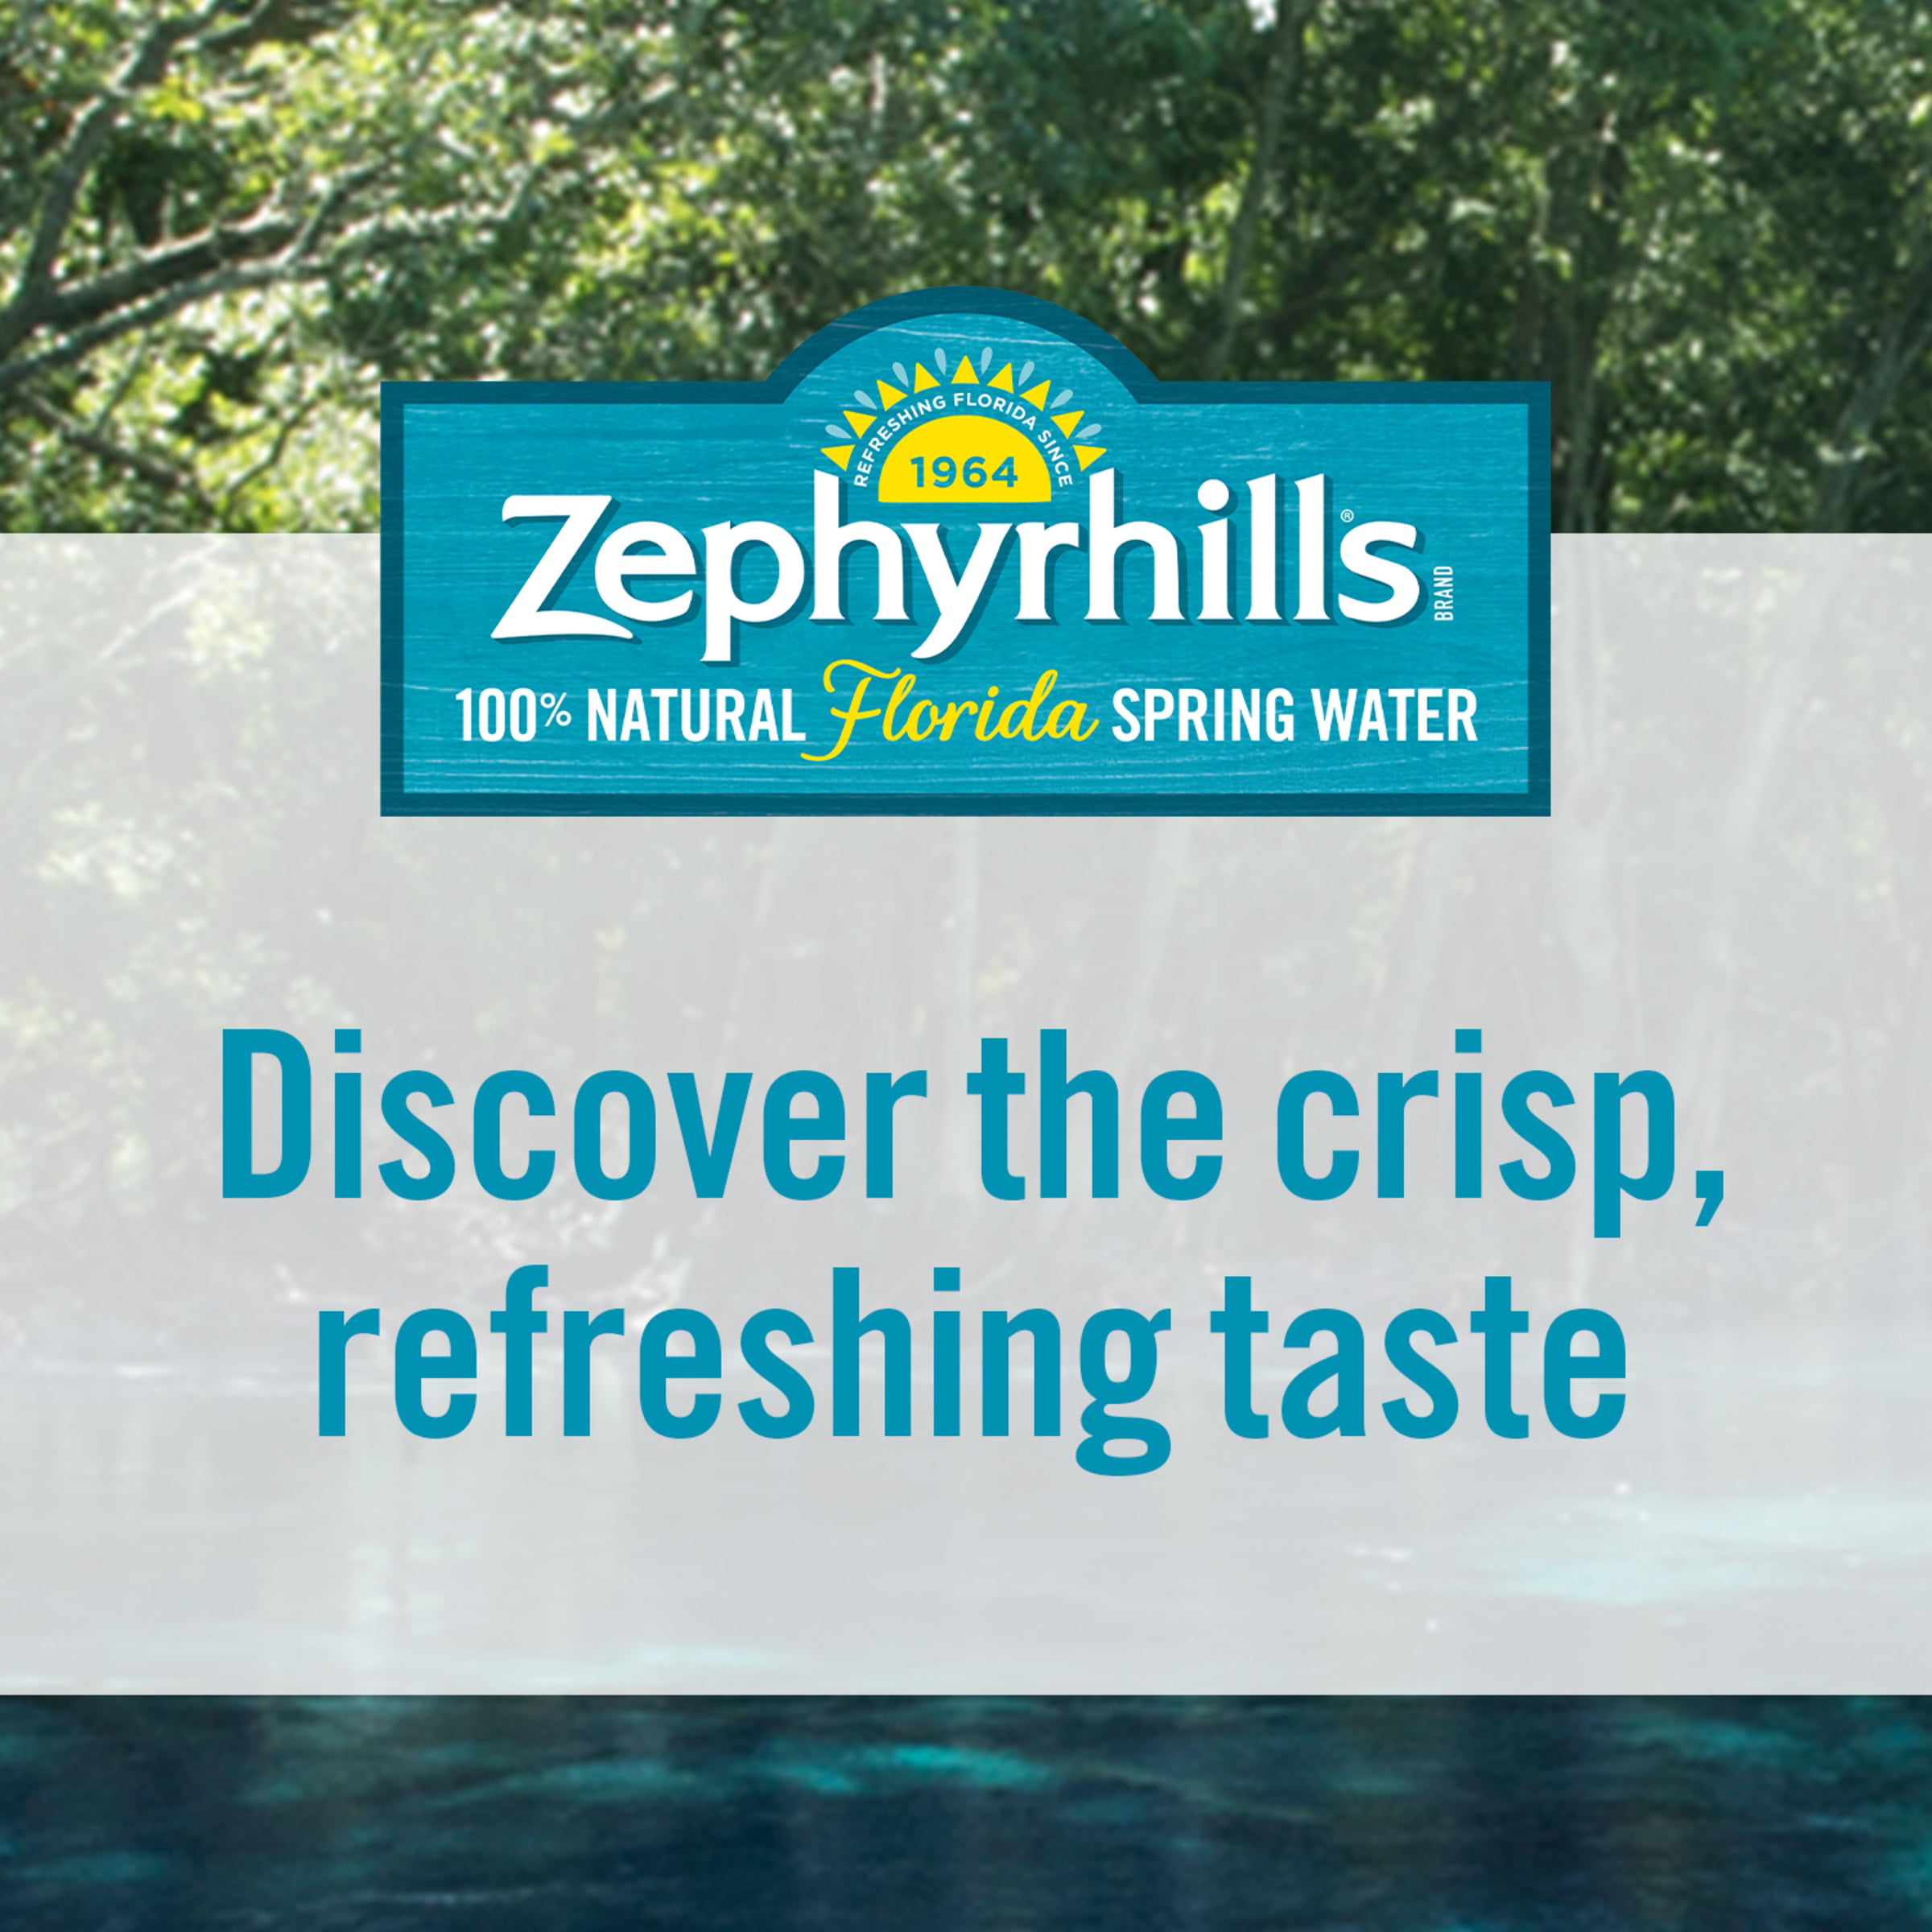 ZEPHYRHILLS Brand 100% Natural Spring Water, 33.8-ounce plastic bottles (Pack of 15) - 1